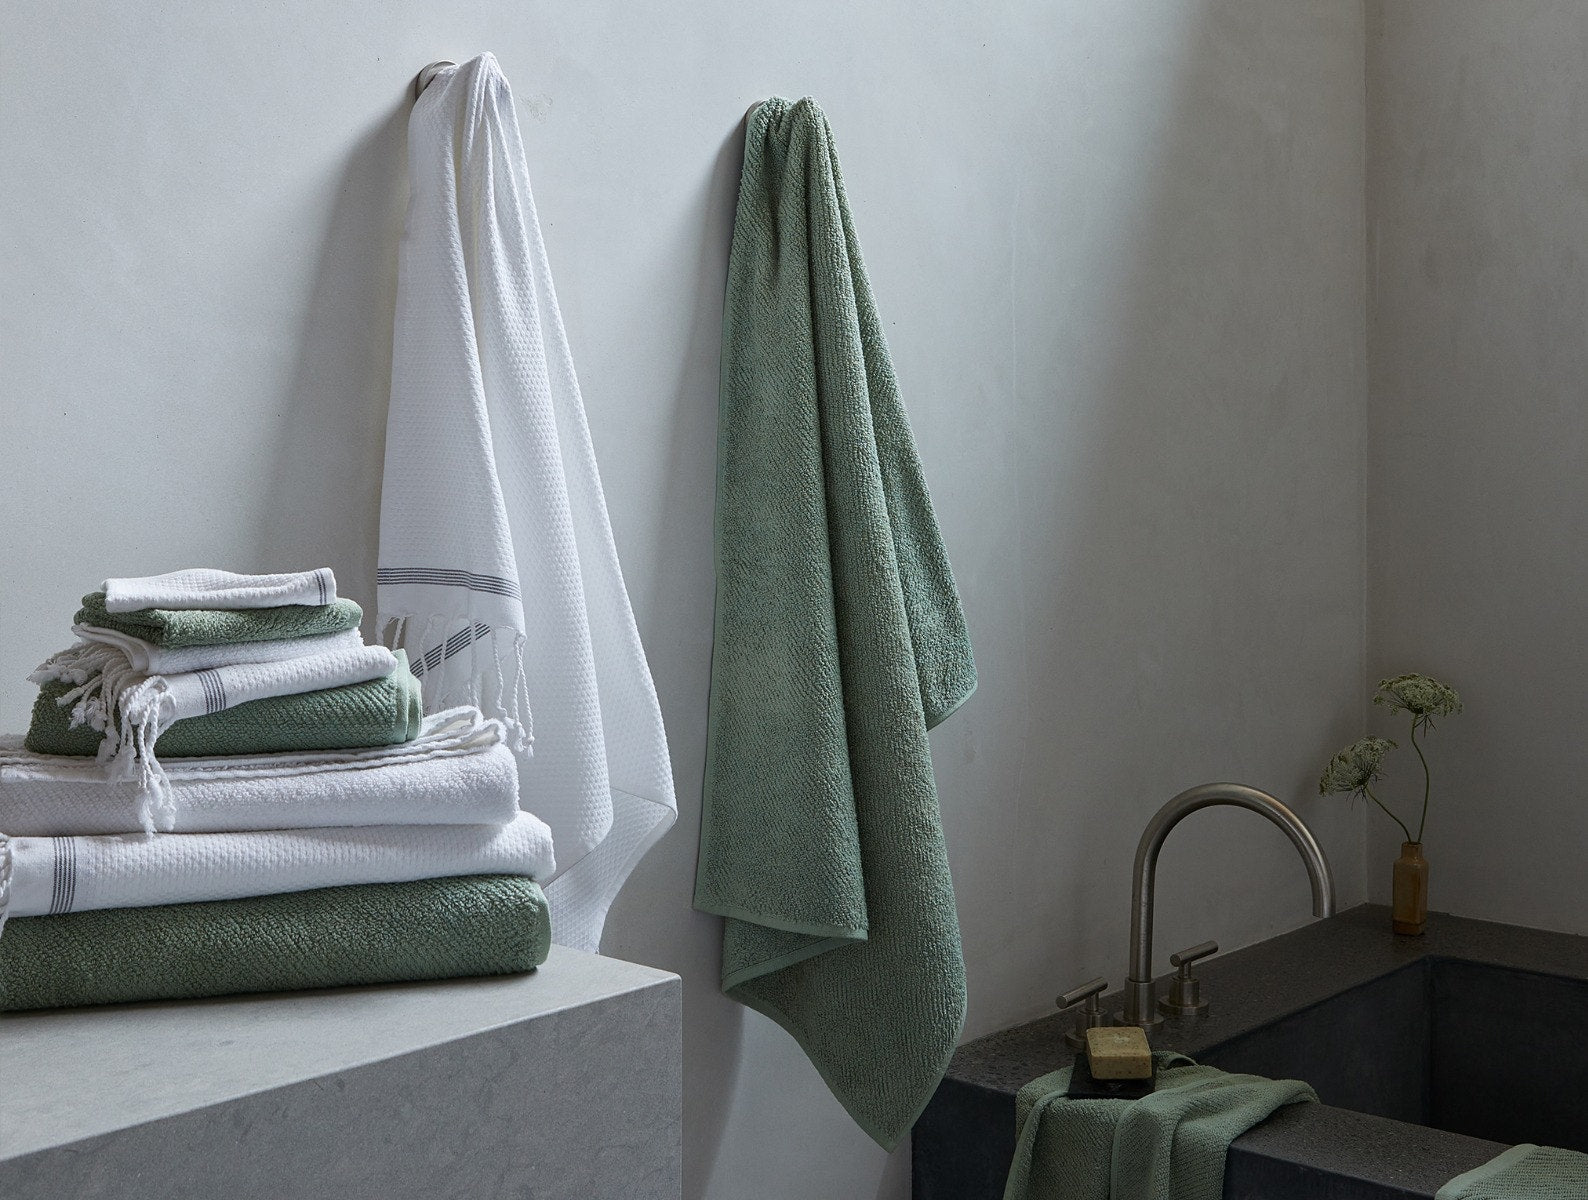 Organic Towel Sets - Clearance  Organic towel, Hanging bath